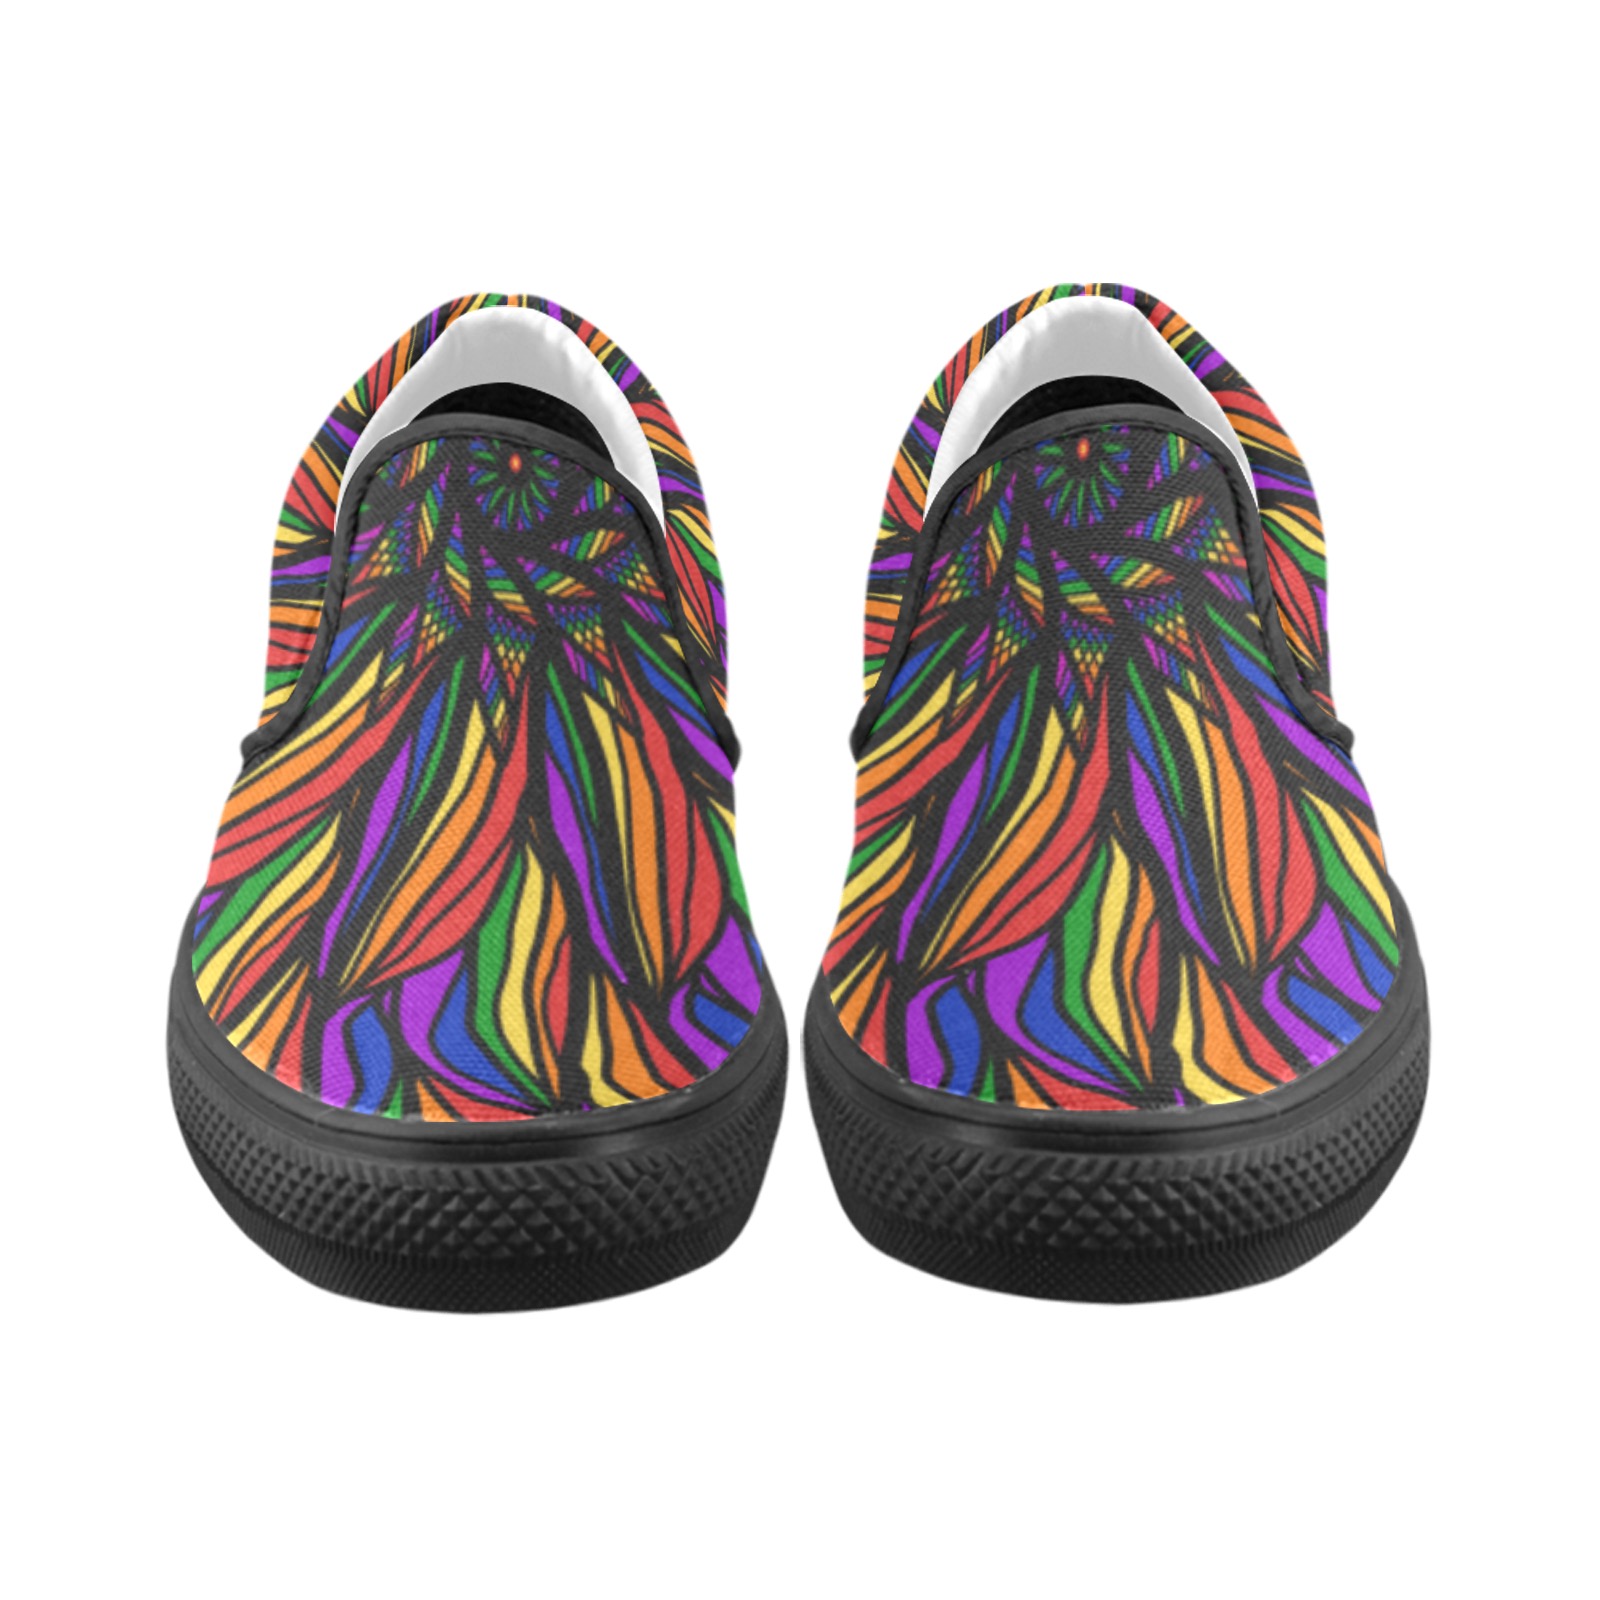 Ô Rainbow Feather Flower Mandala Women's Unusual Slip-on Canvas Shoes (Model 019)